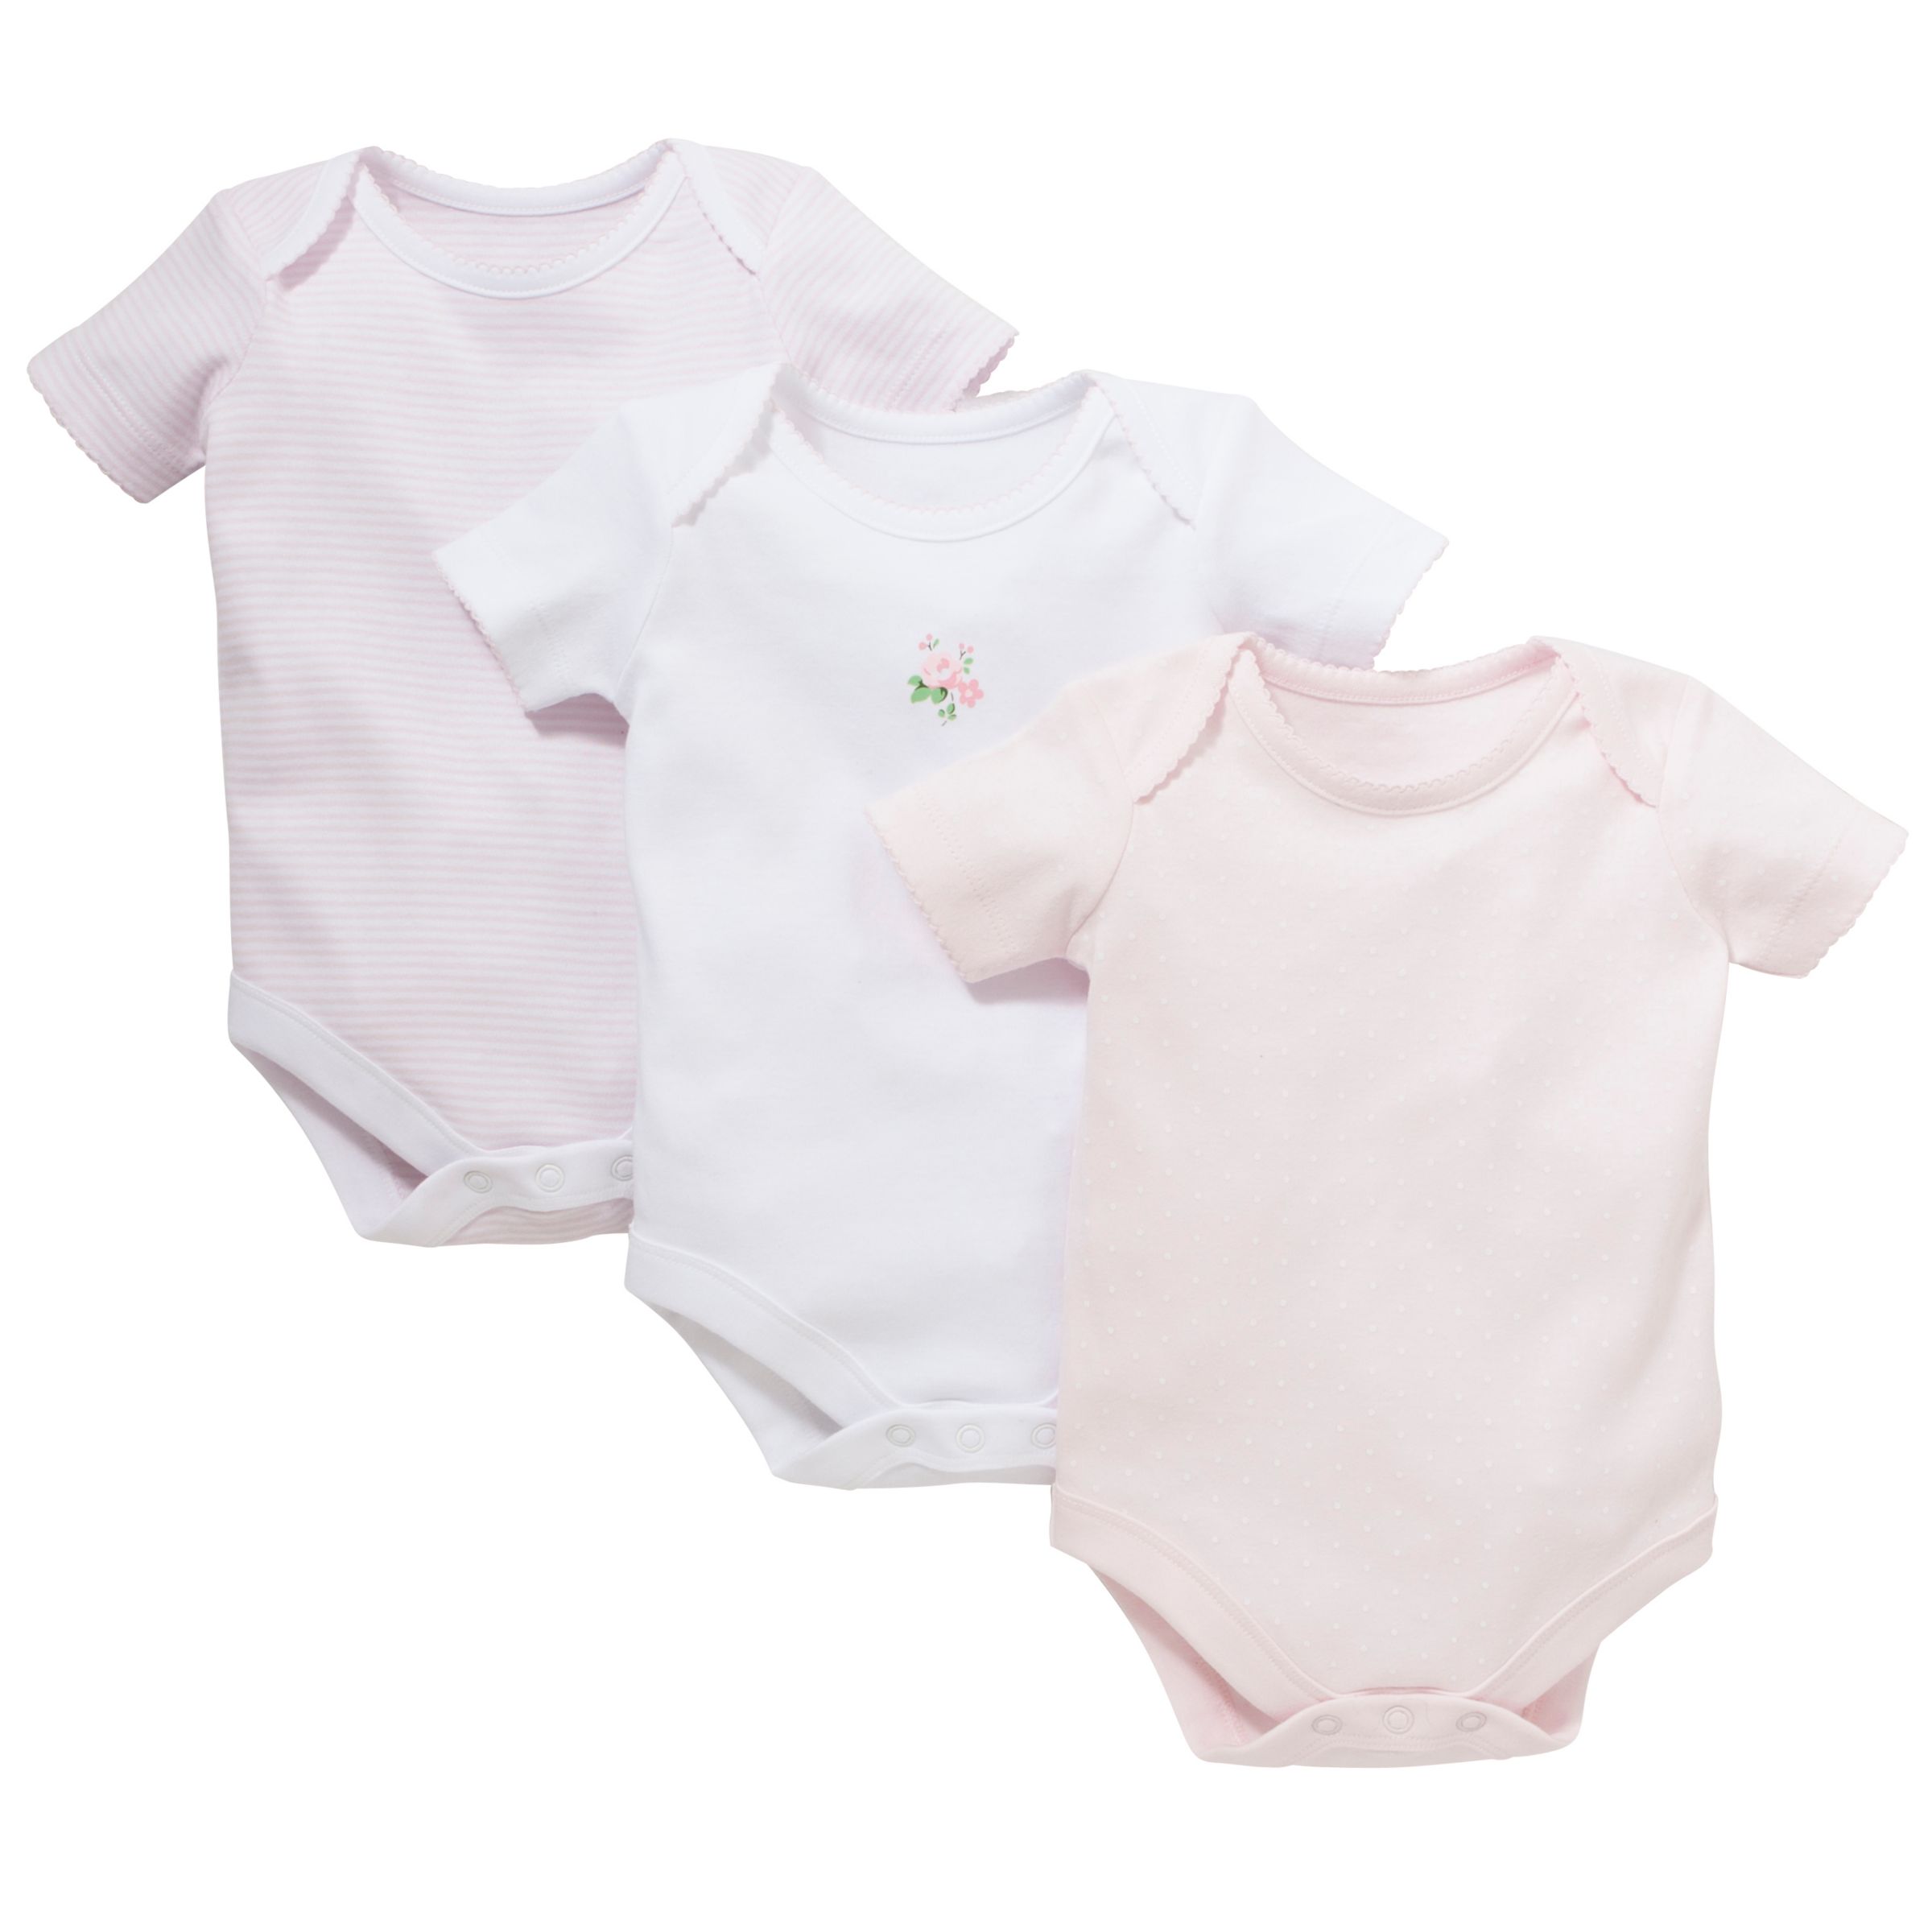 John Lewis & Partners Baby Flower Bodysuits, Pack of 3, Pink